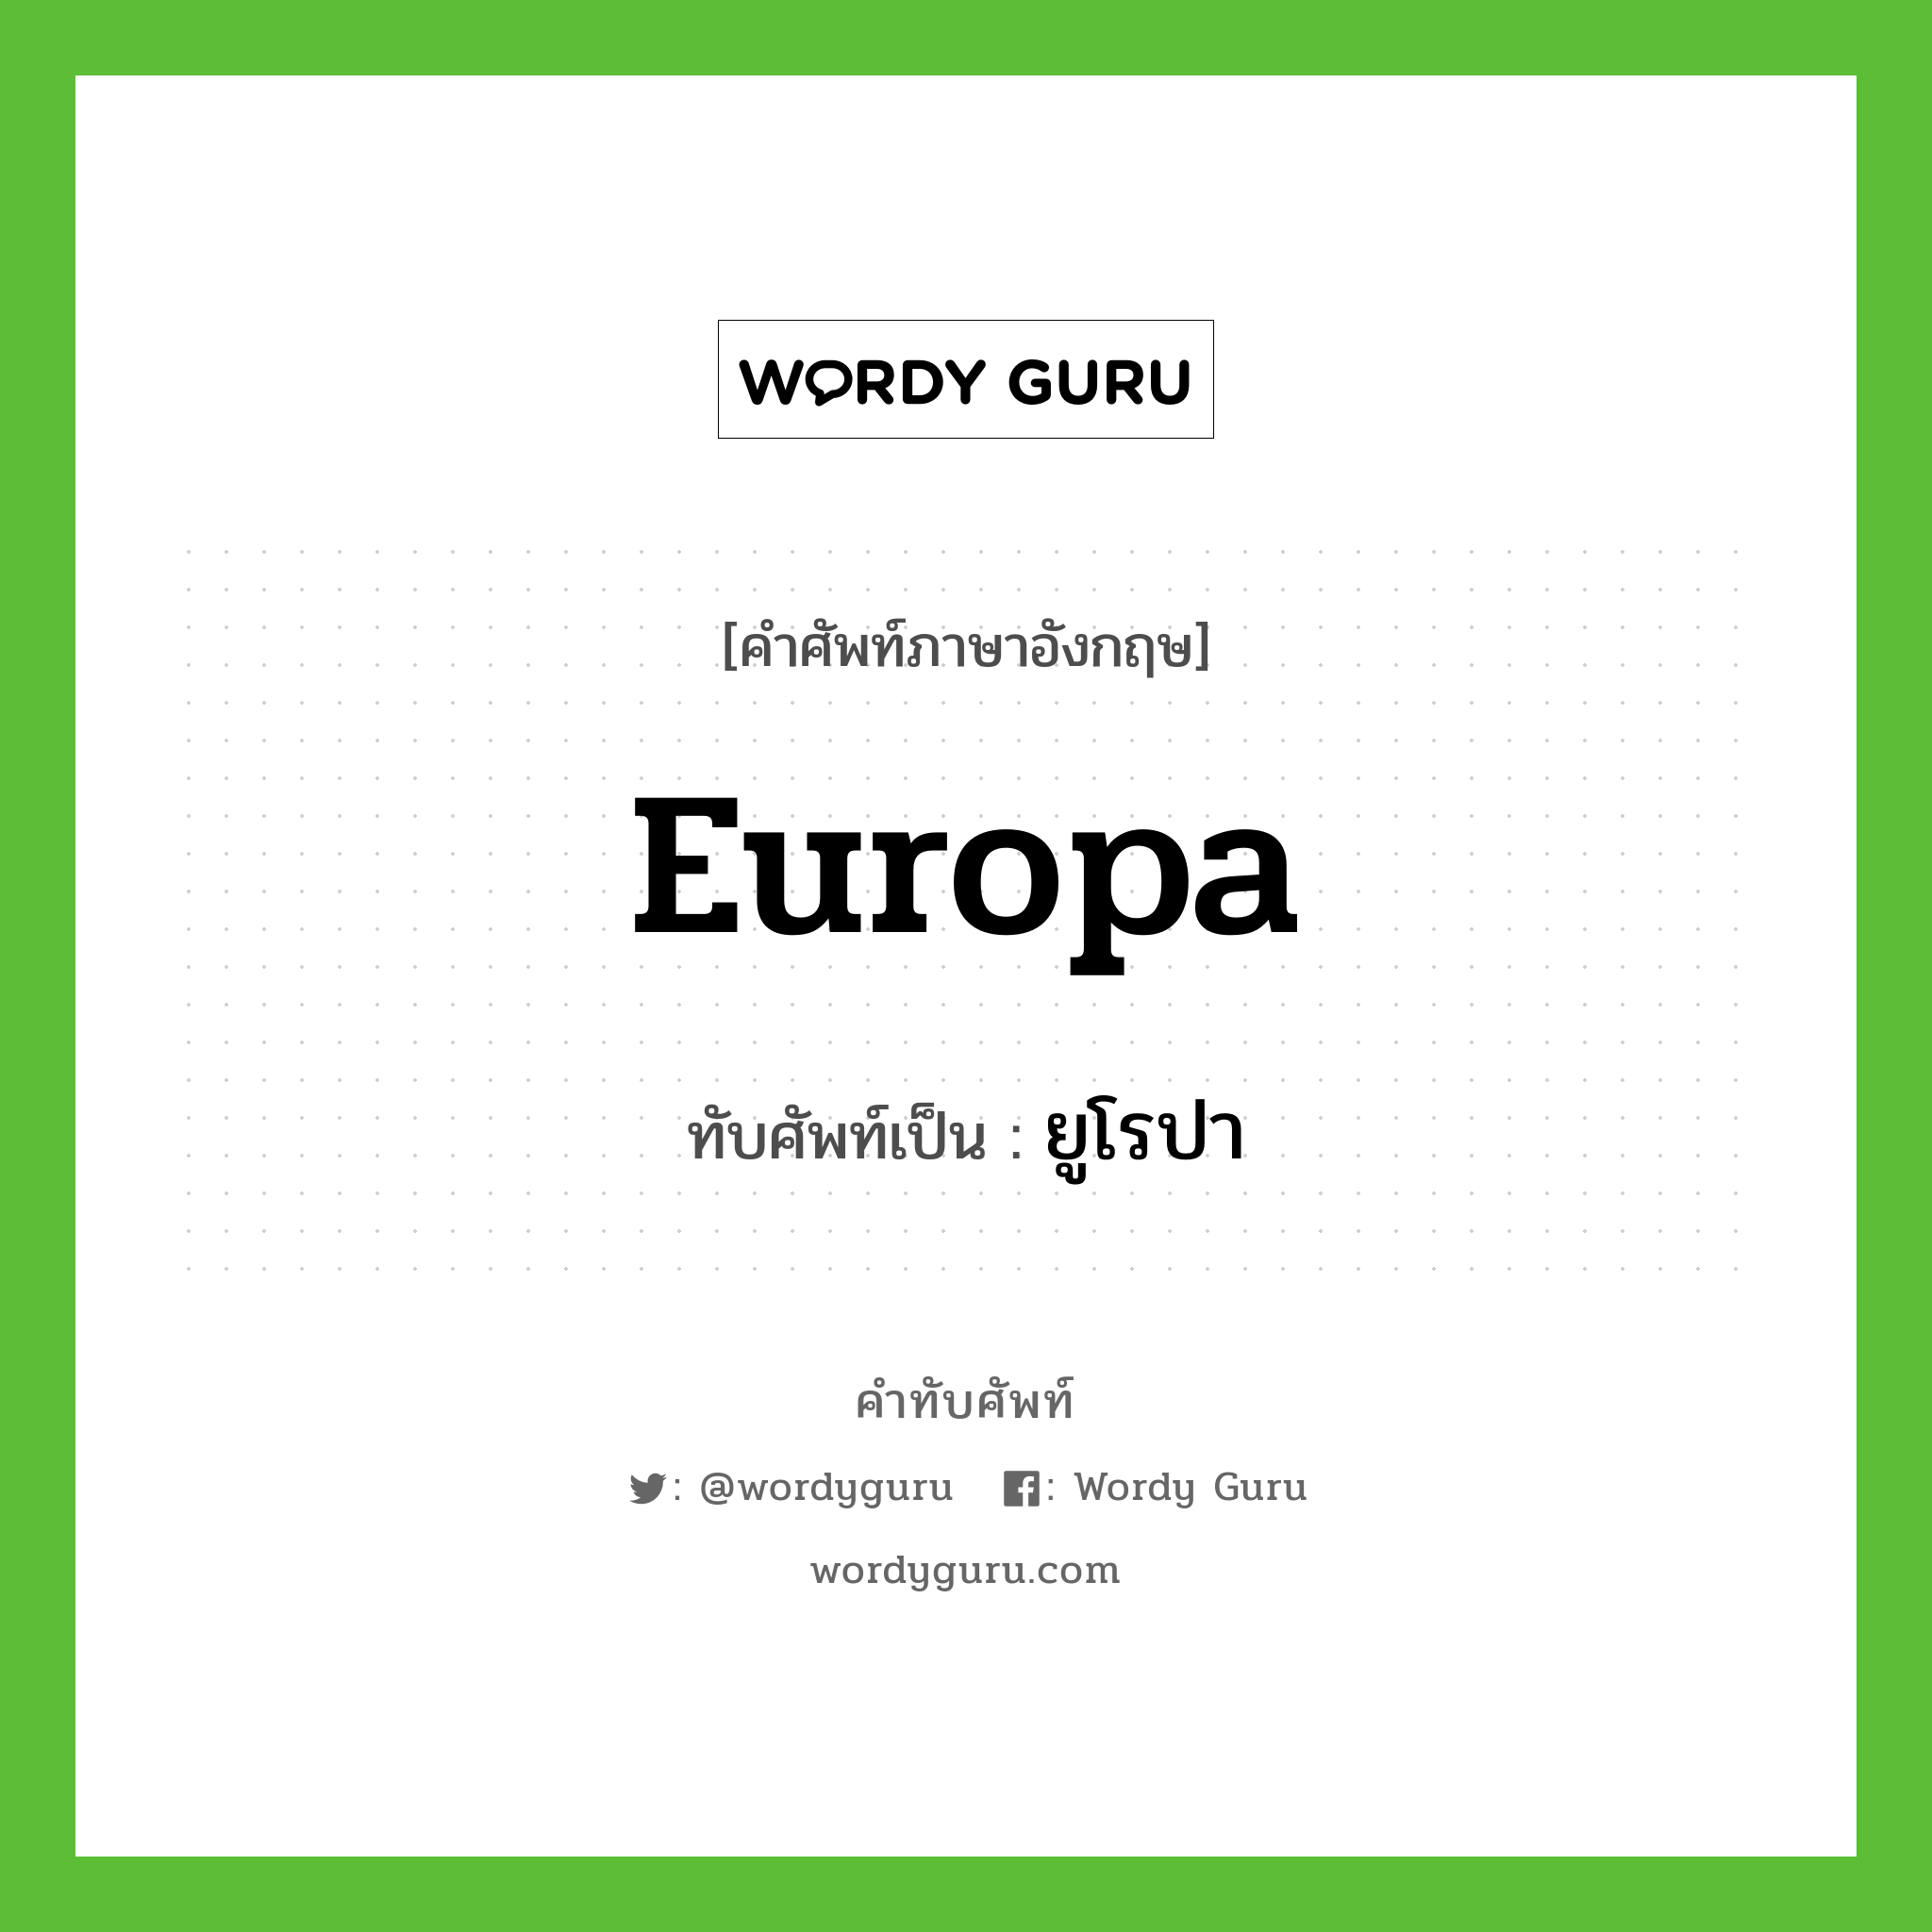 Europa เขียนเป็นคำไทยว่าอะไร?, คำศัพท์ภาษาอังกฤษ Europa ทับศัพท์เป็น ยูโรปา